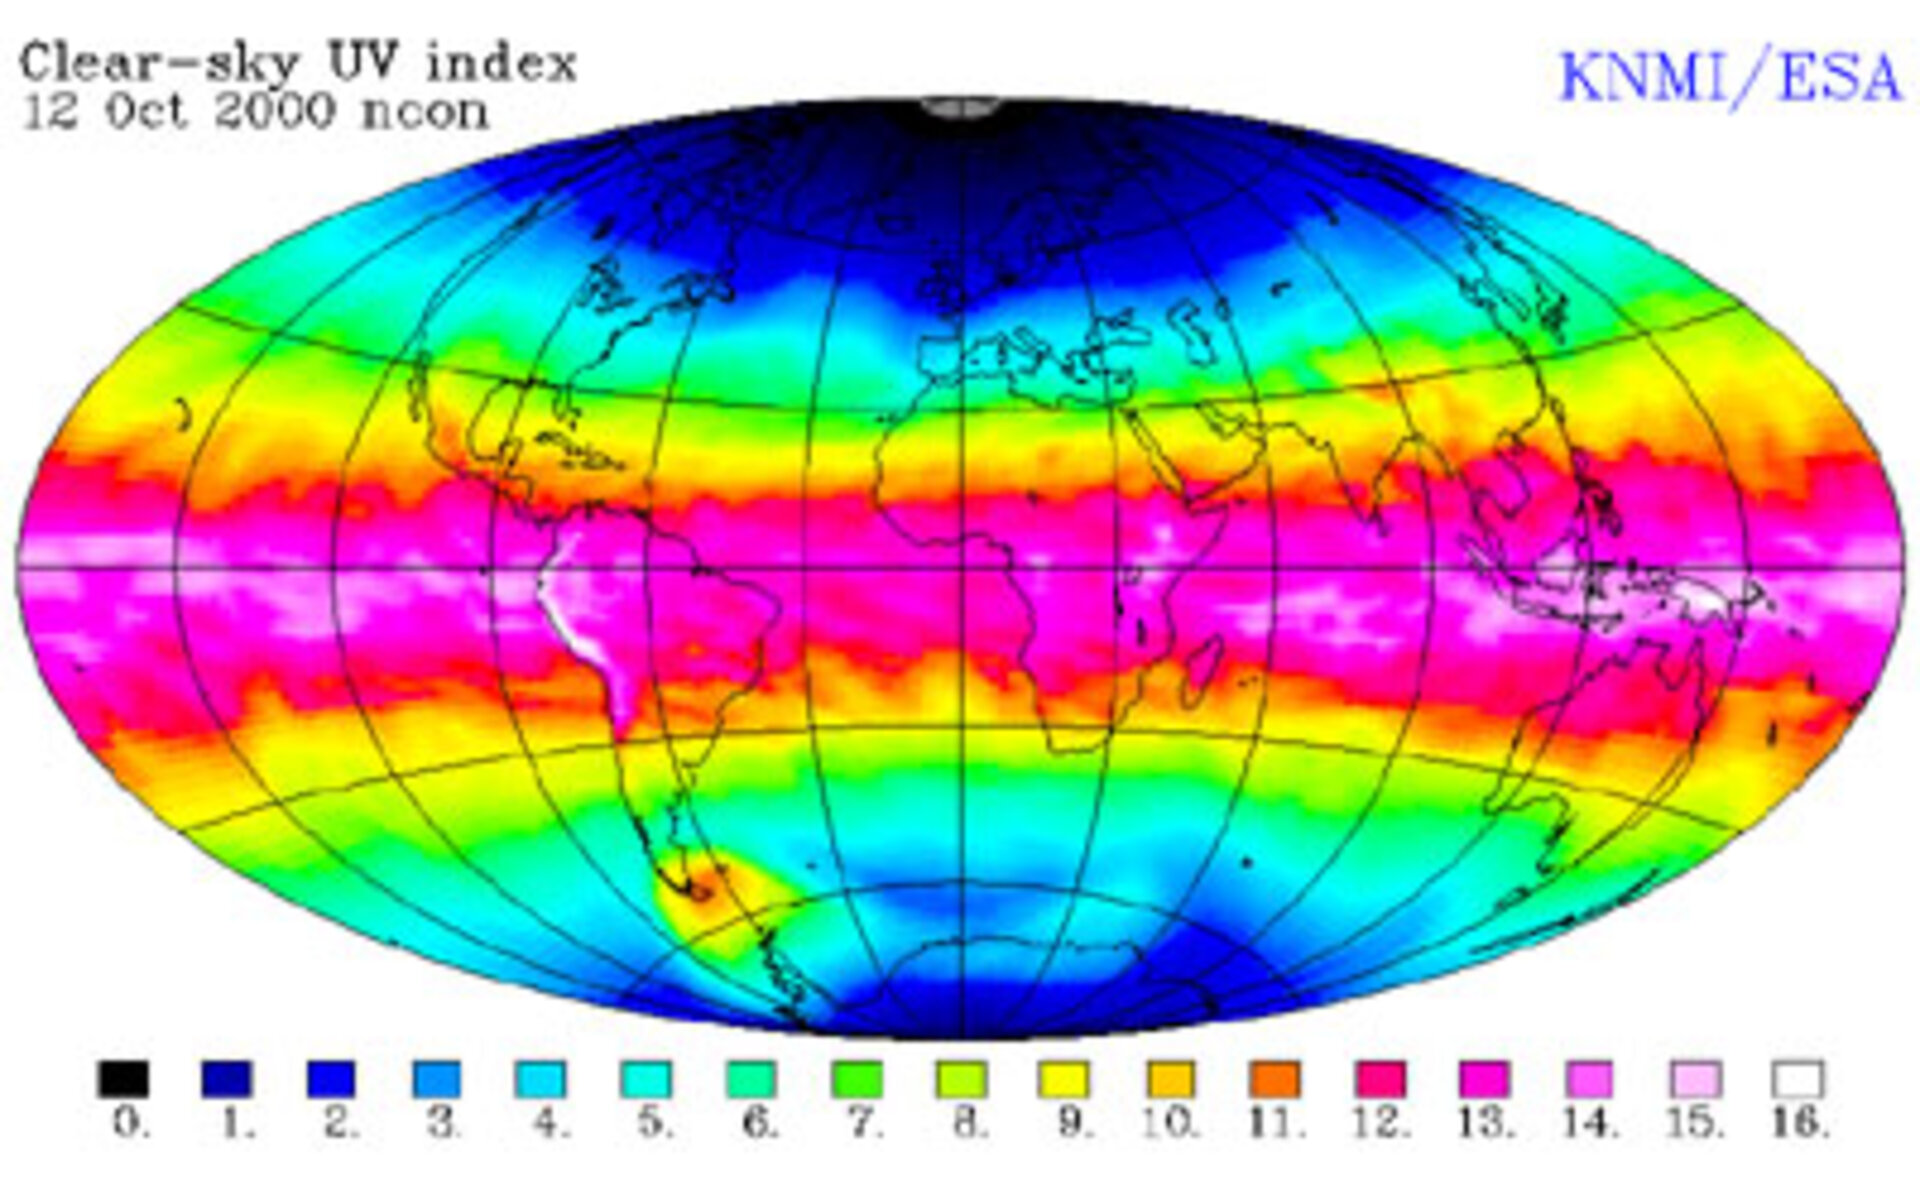 High UV radiation over South America